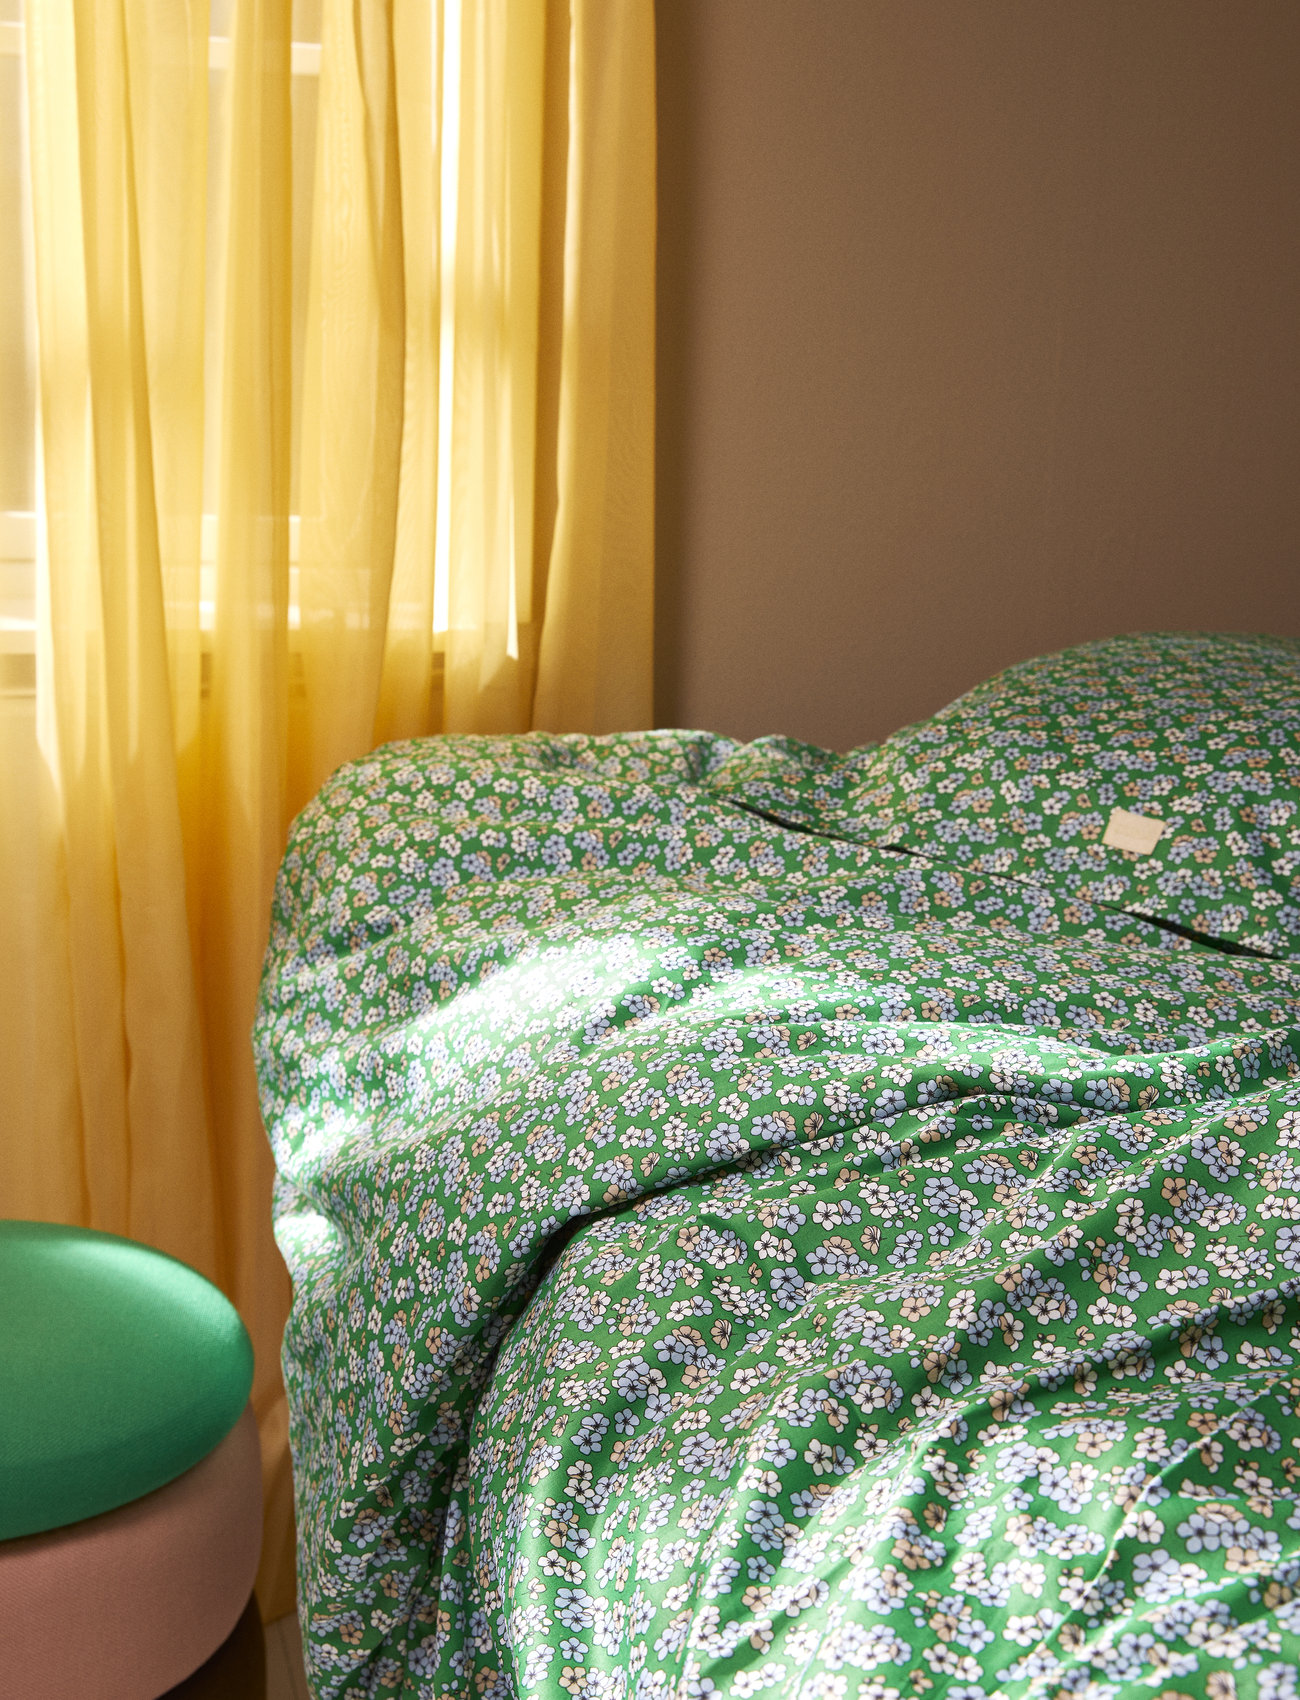 Juna - Pleasantly Bed linen 150x210 cm green - green - 1